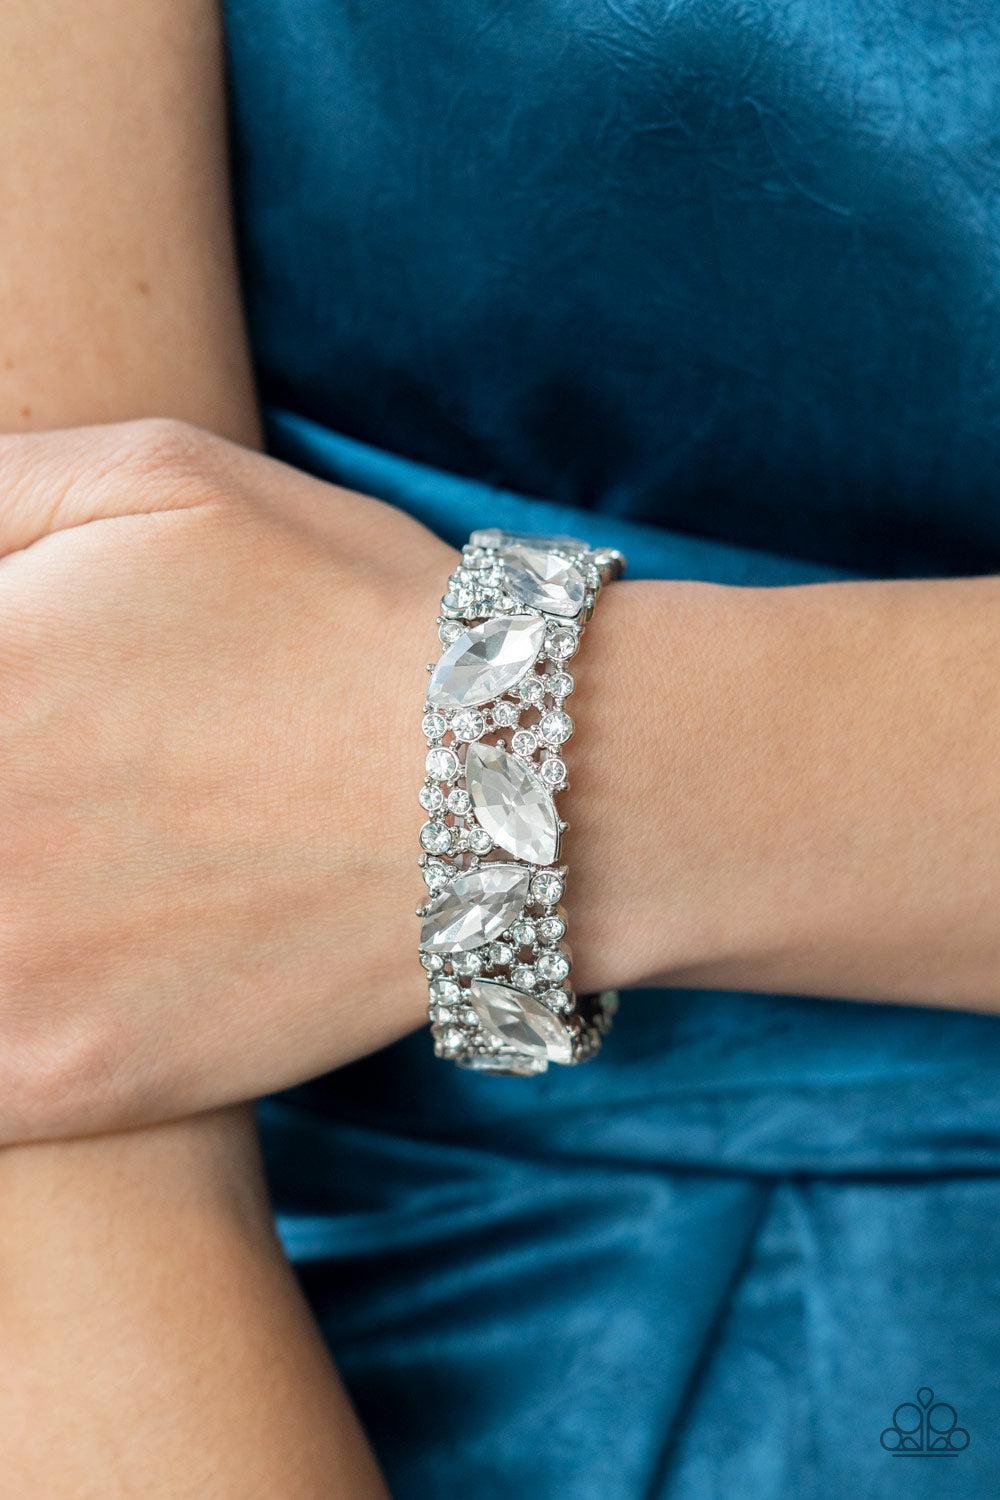 Full Body Chills White Rhinestone Bracelet - Paparazzi Accessories- lightbox - CarasShop.com - $5 Jewelry by Cara Jewels